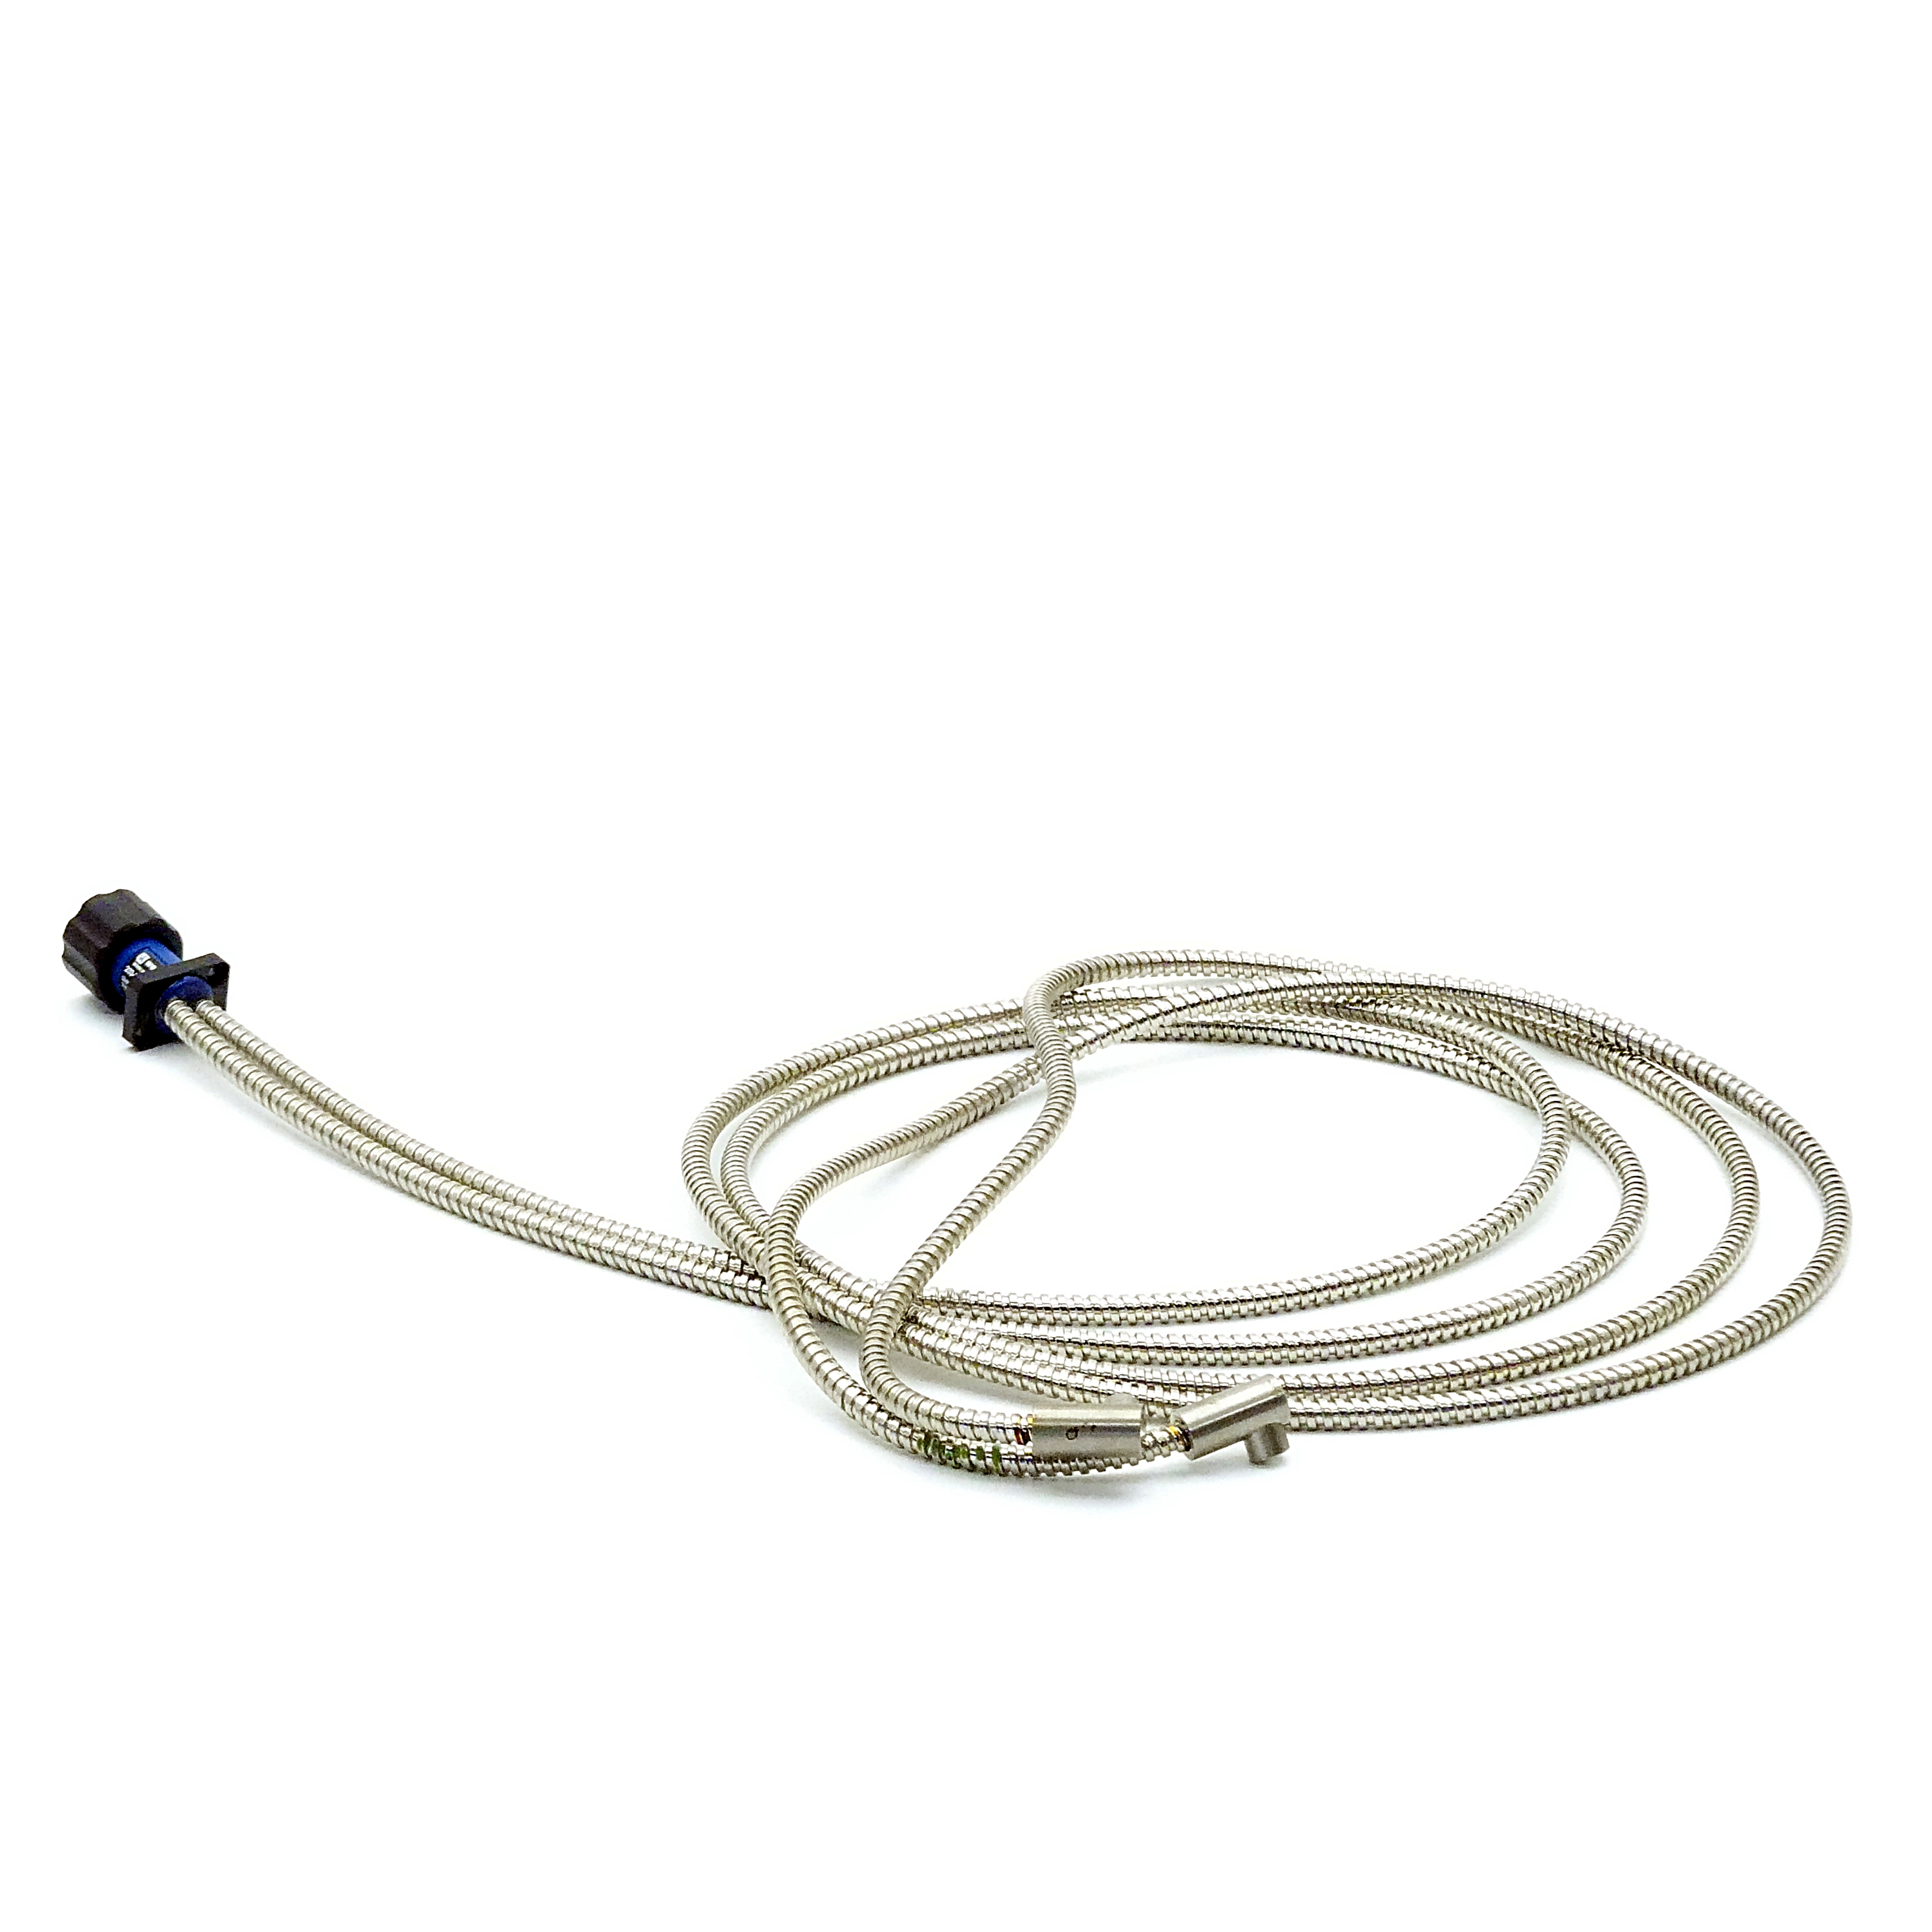 Fiber optic light guide cable 